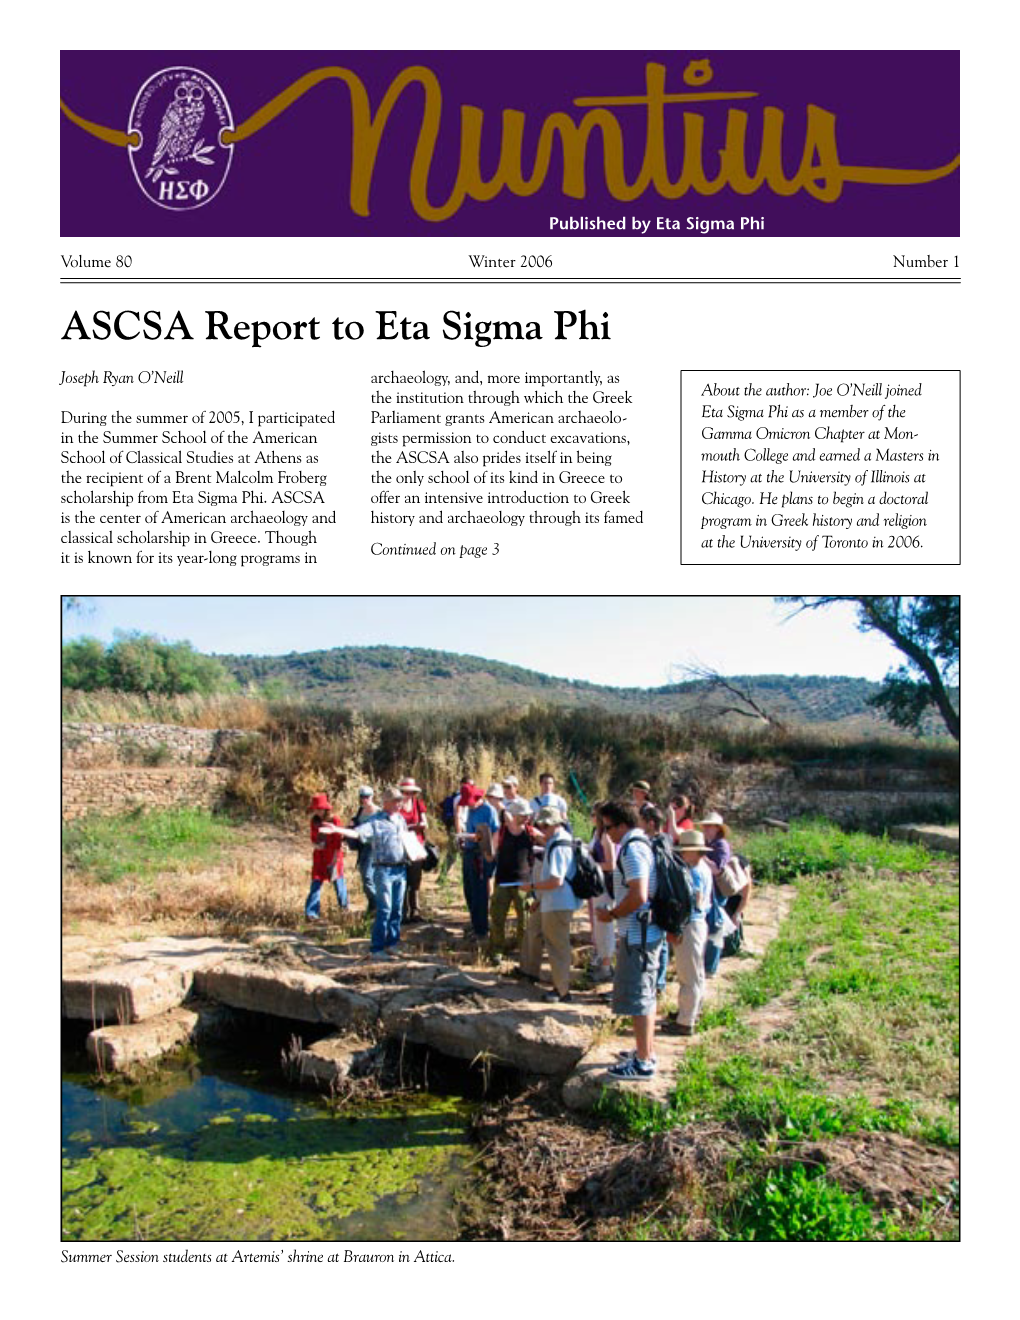 ASCSA Report to Eta Sigma Phi